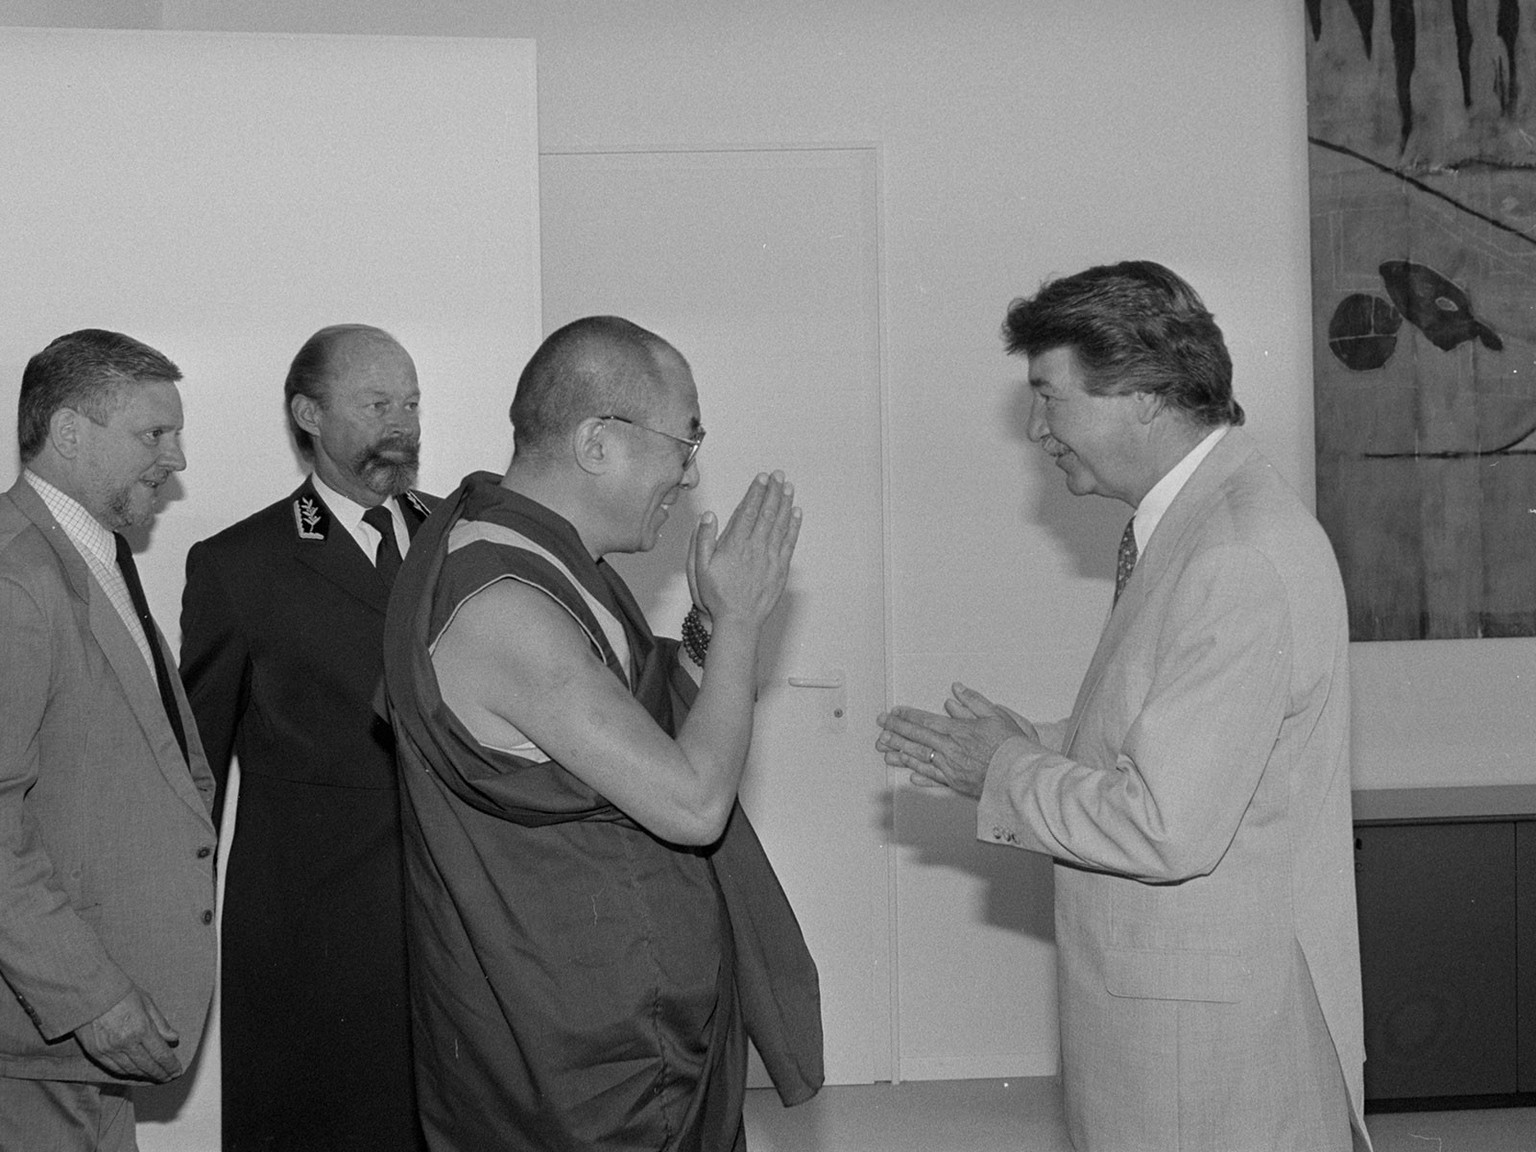 Begrüssung des Dalai Lama durch Bundesrat René Felber am 19. August 1991 in Bern.
https://permalink.nationalmuseum.ch/100834477